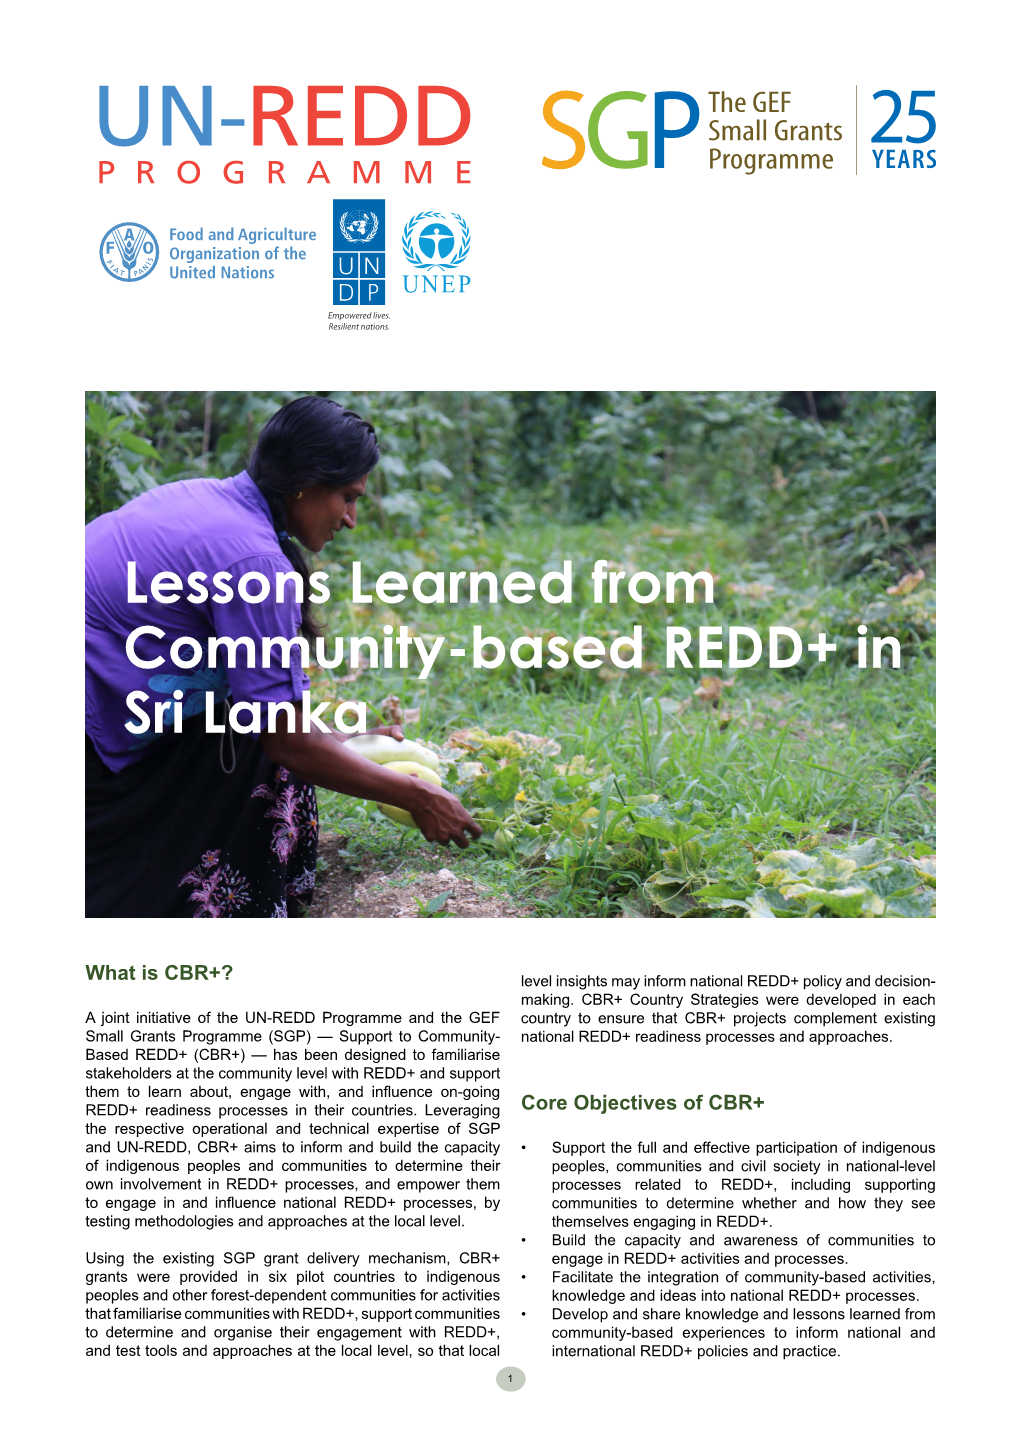 Lessons Learned from Community-Based REDD+ in Sri Lanka